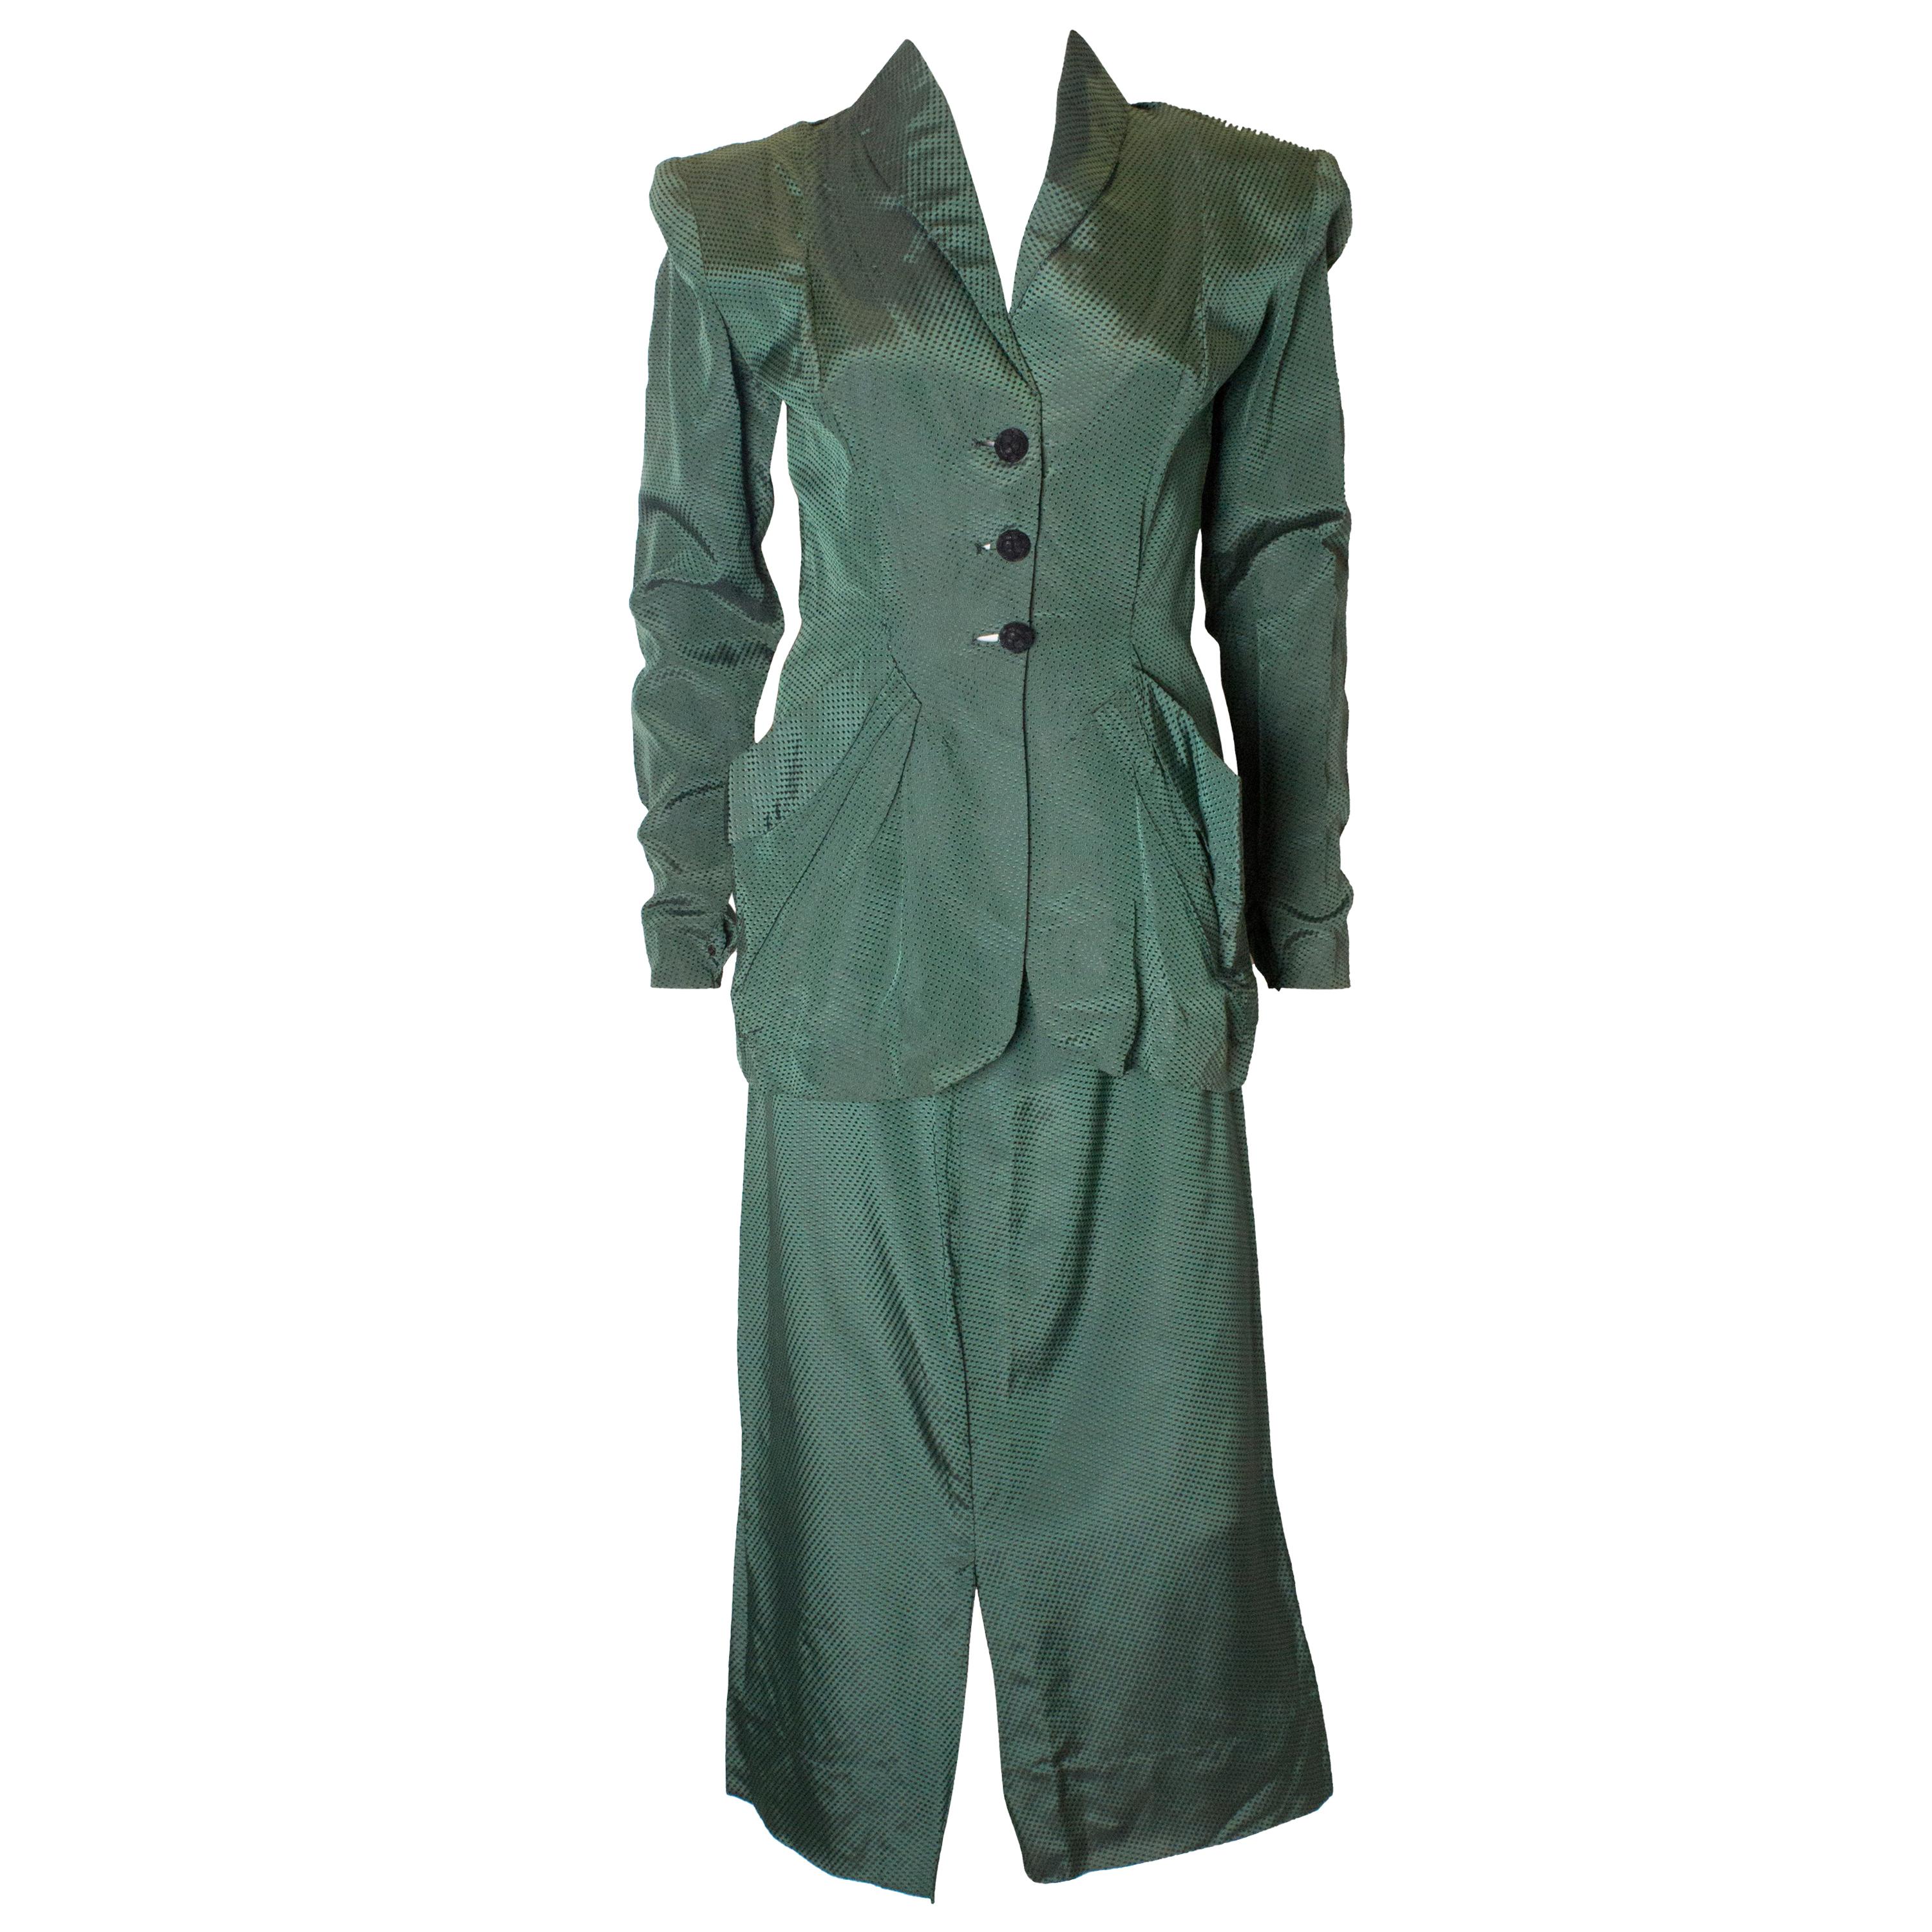 Vintage 1940s Skirt Suit For Sale